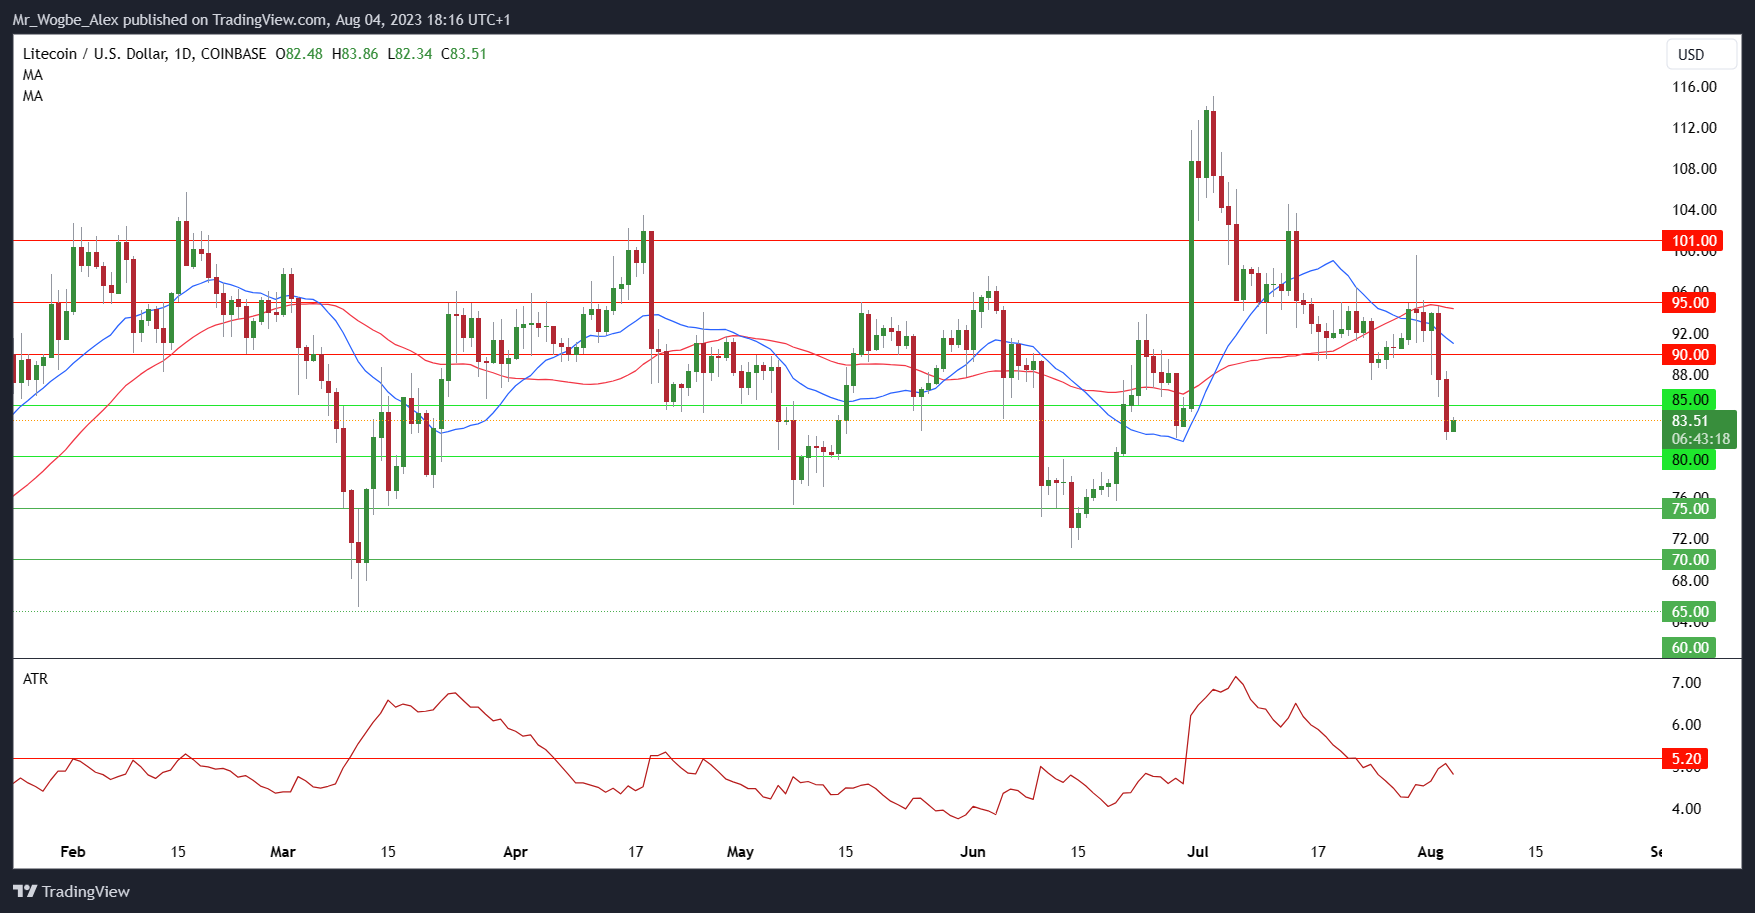 LTC/USD Daily Chart from TradingView